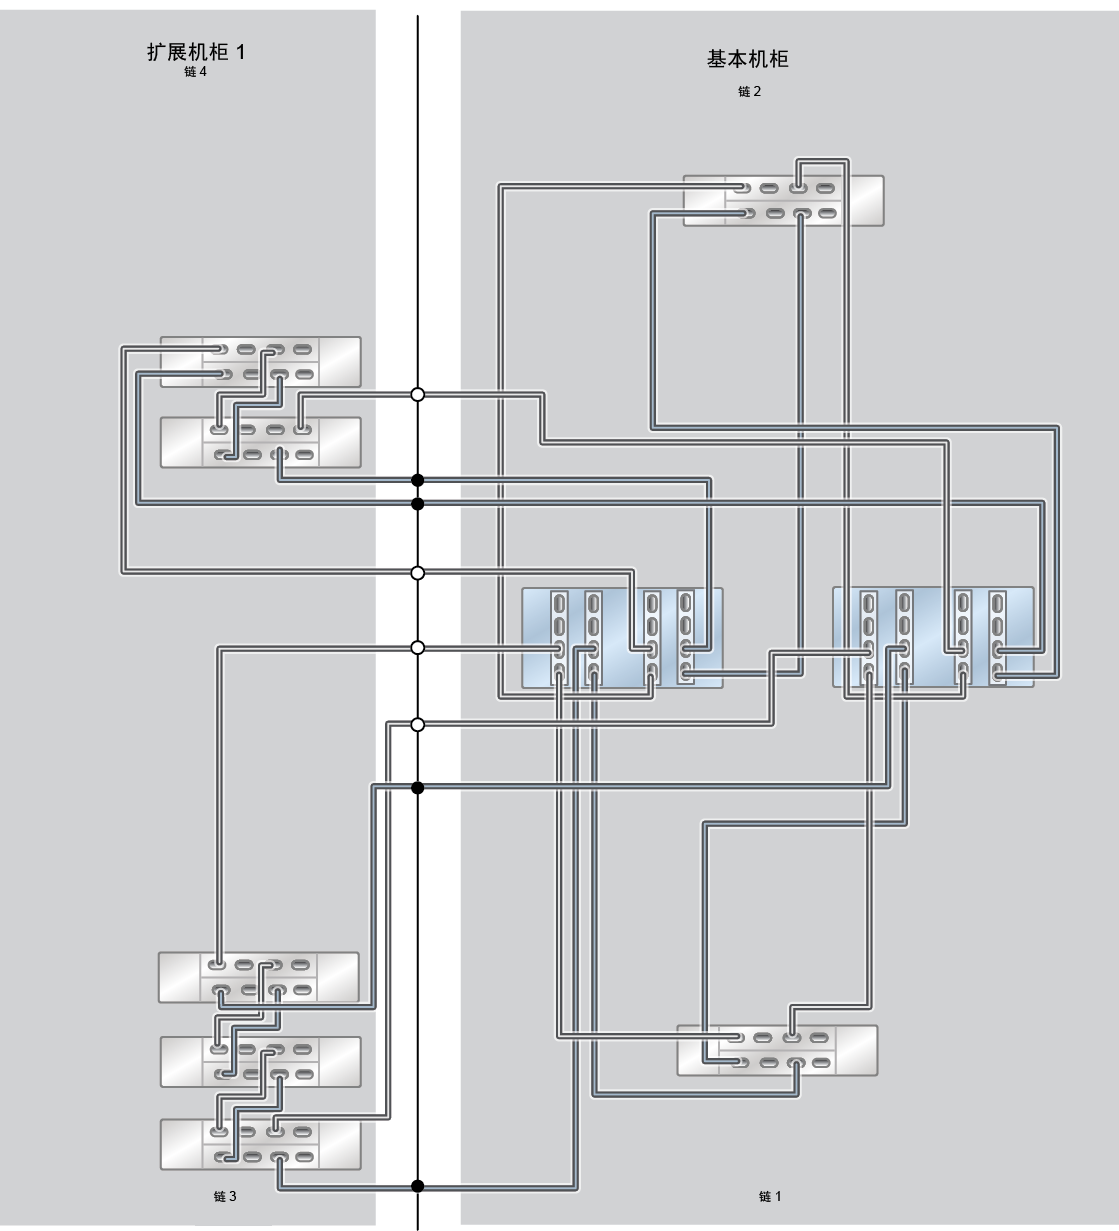 image:此图显示了具有一个扩展机柜（五个 DE3-24C 磁盘机框）的 ZS7-2 HE Racked System 全闪存。